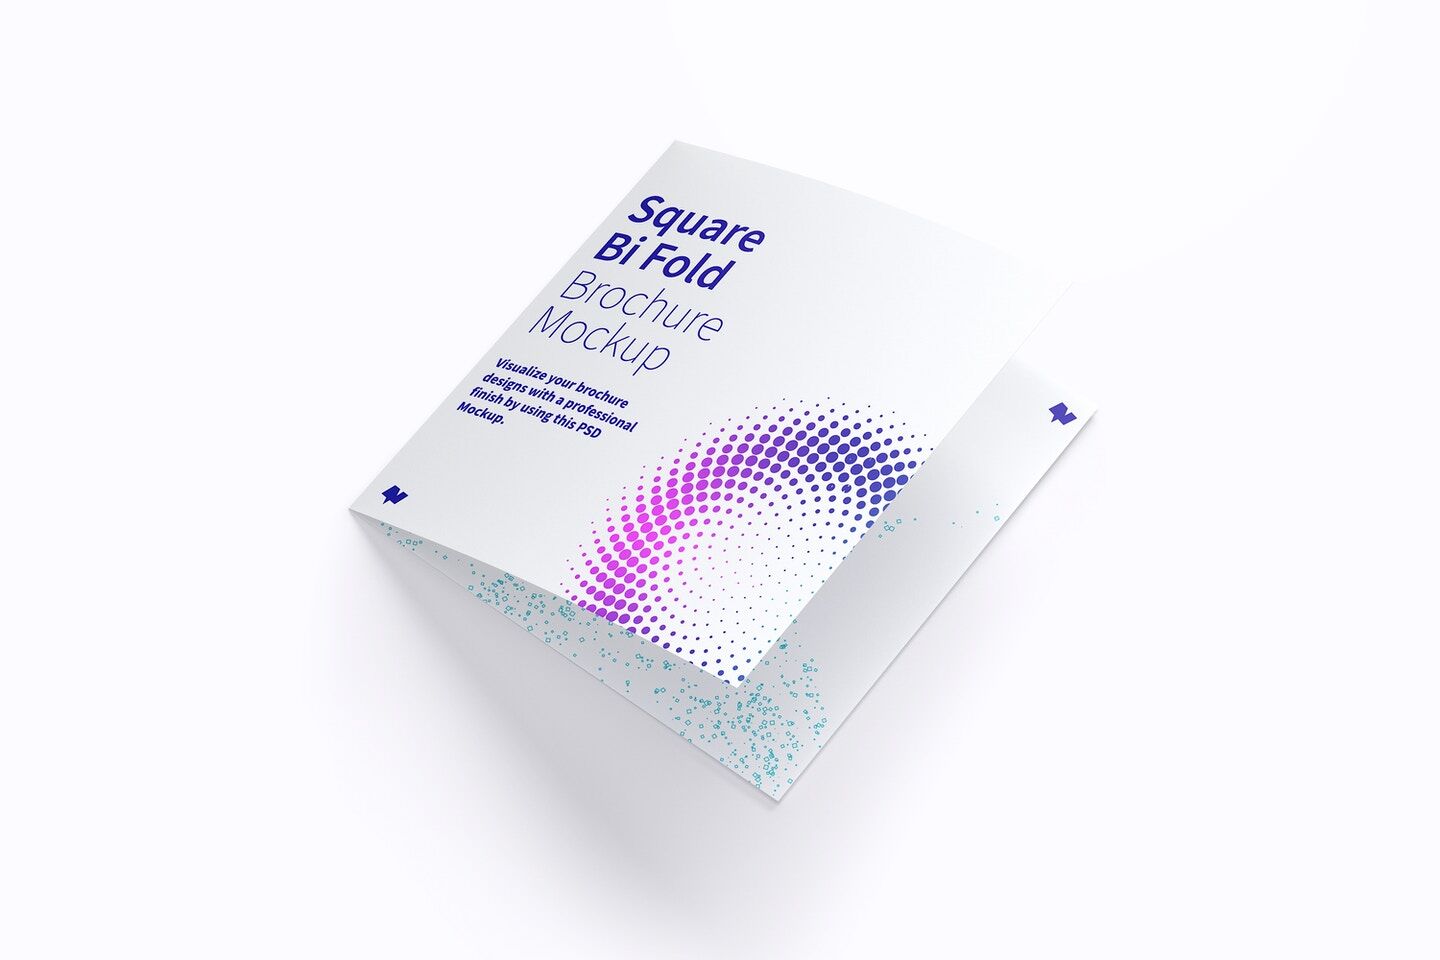 Square Bi-Fold Brochure Mockup FREE PSD